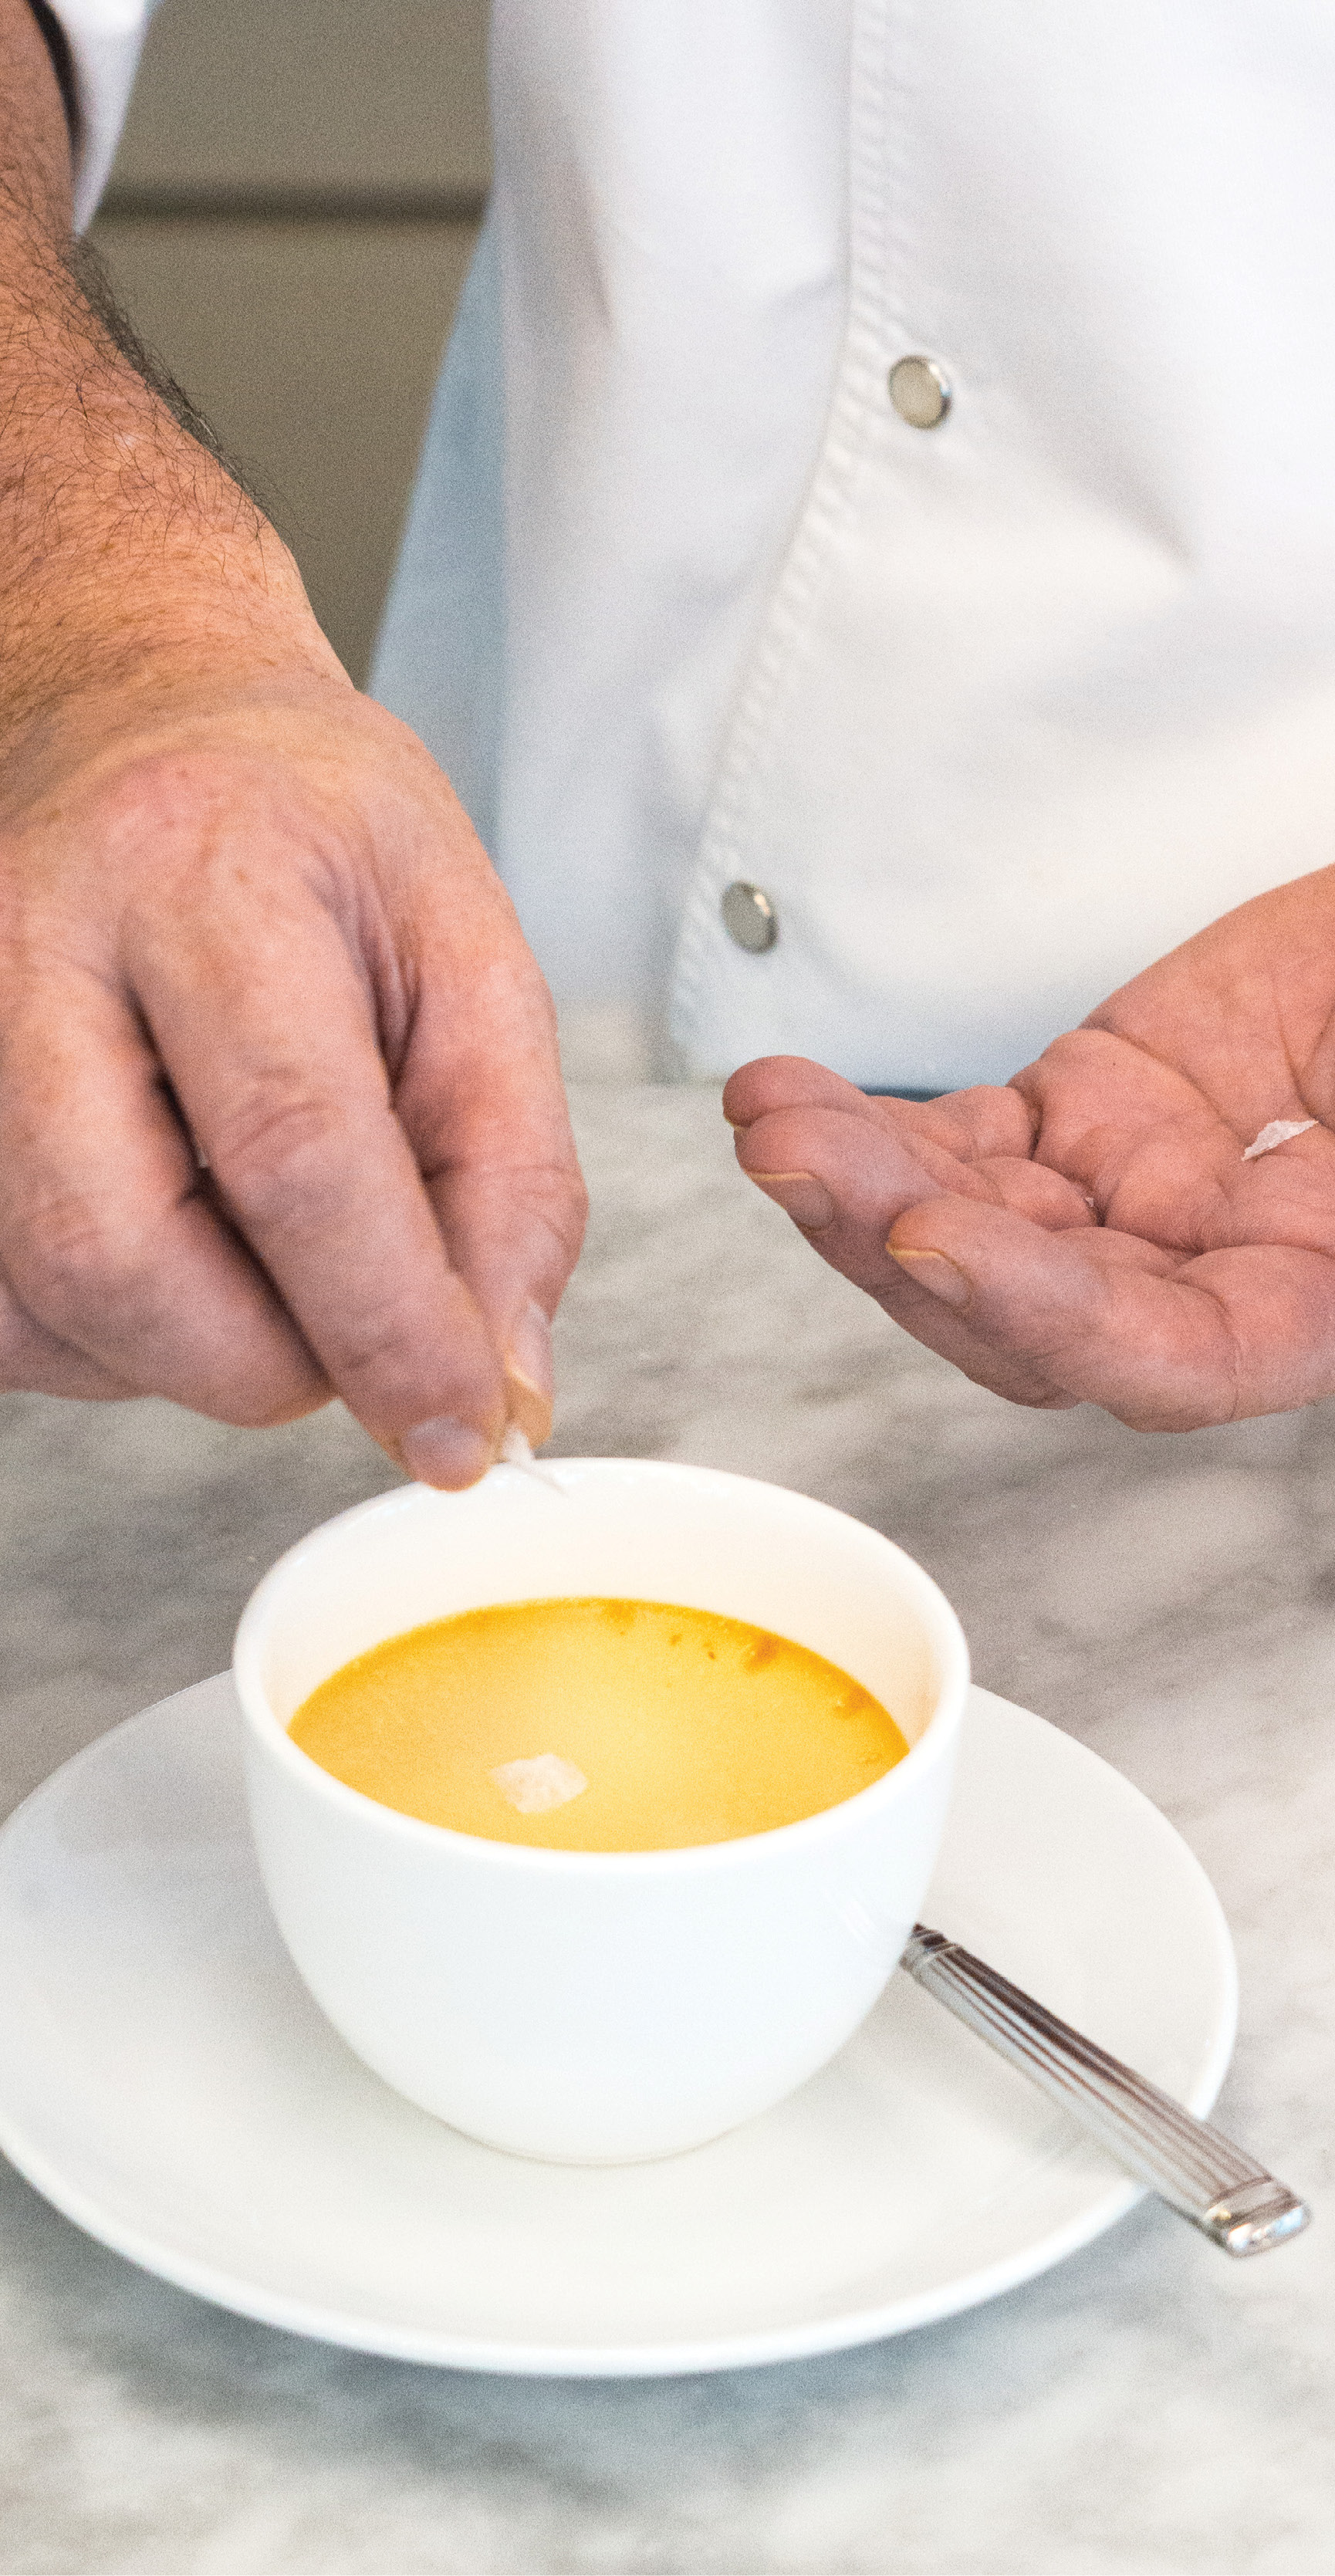 Finishing Touch: Chef Fünfrock uses Maldon flake salt to garnish his pot de crèmes.